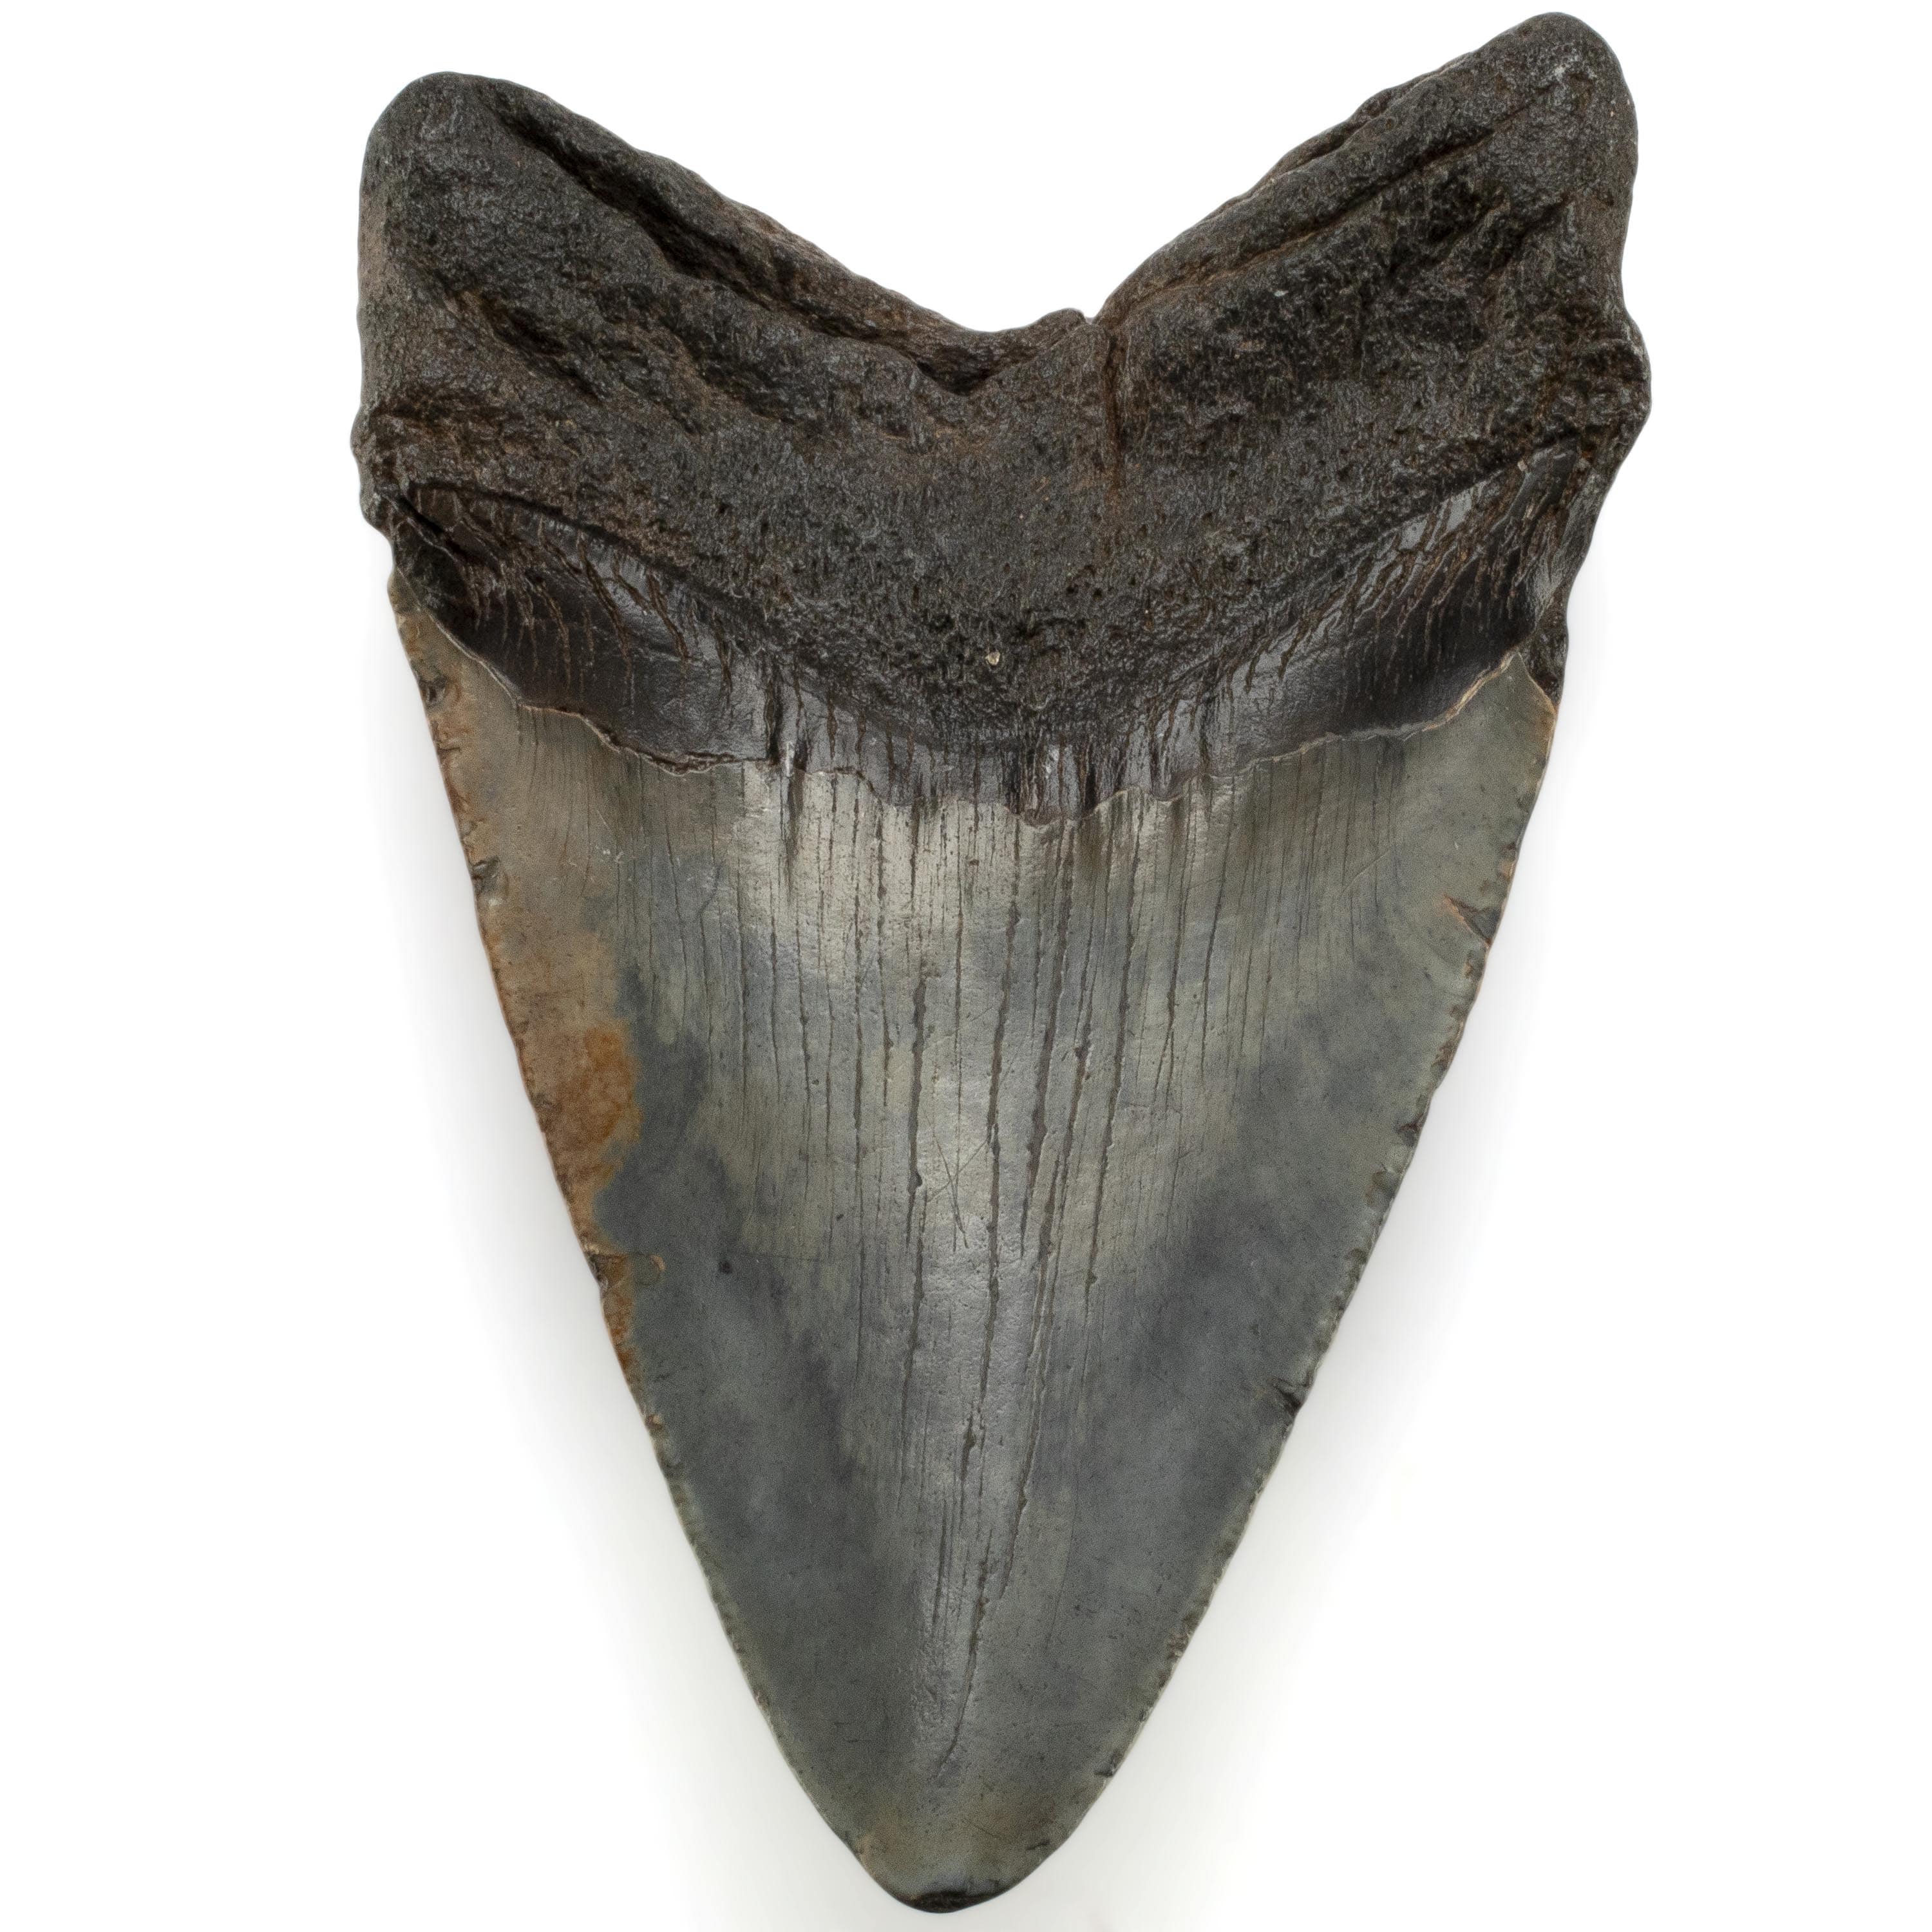 Kalifano Megalodon Teeth Megalodon Tooth from South Carolina - 5" ST3200.001